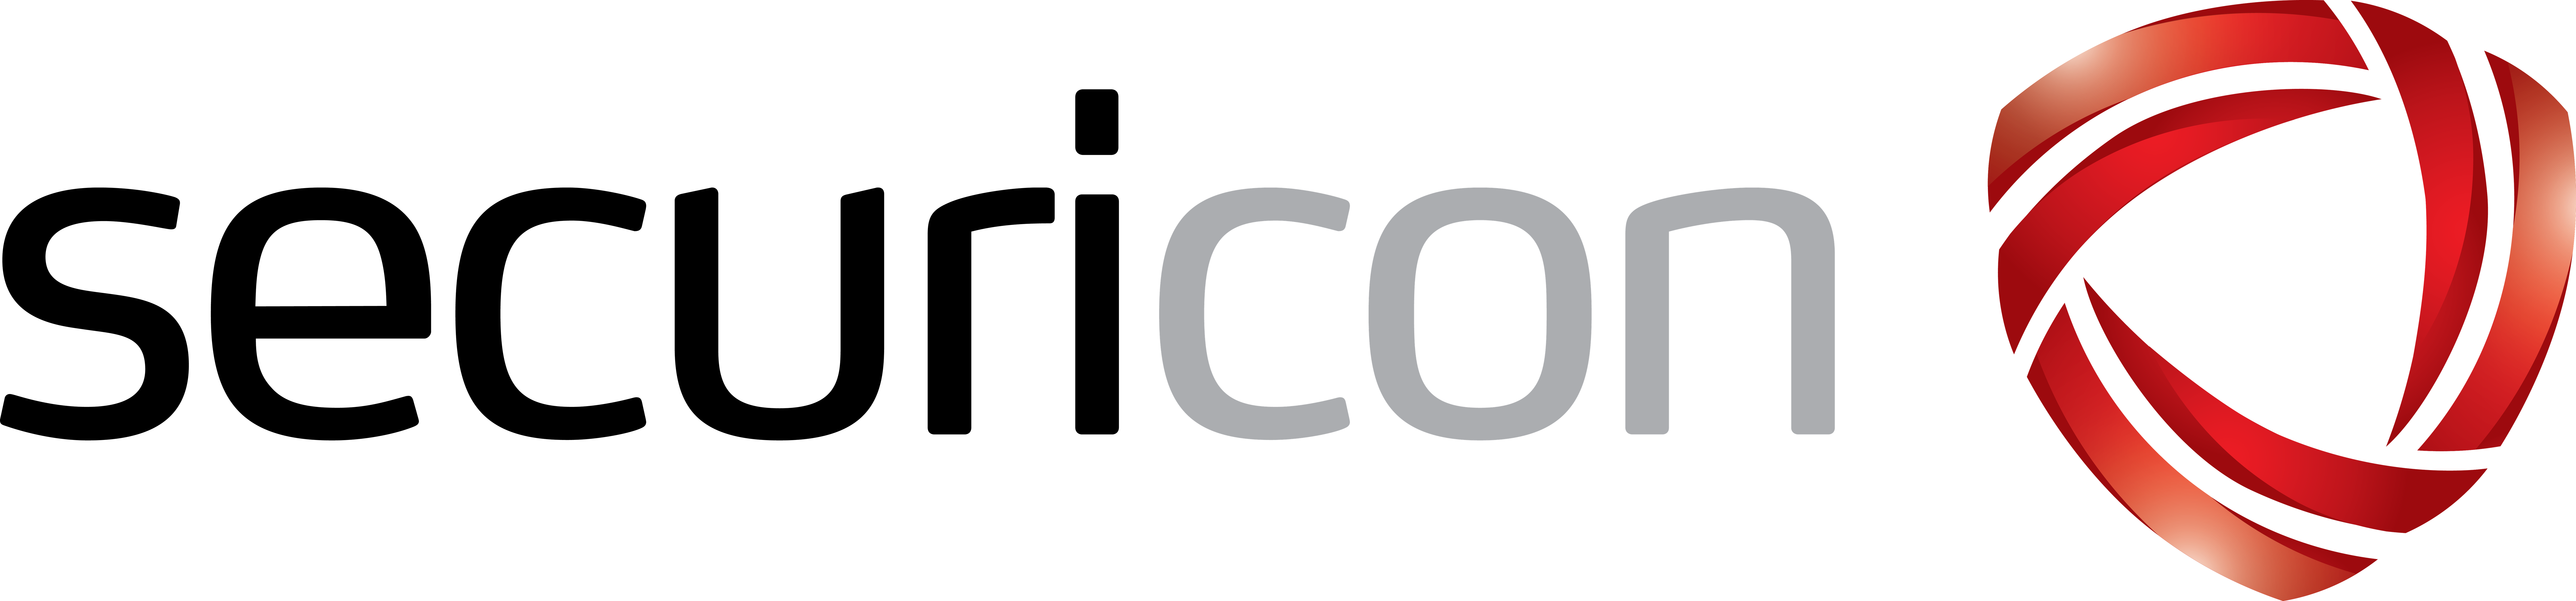 logo_opwit